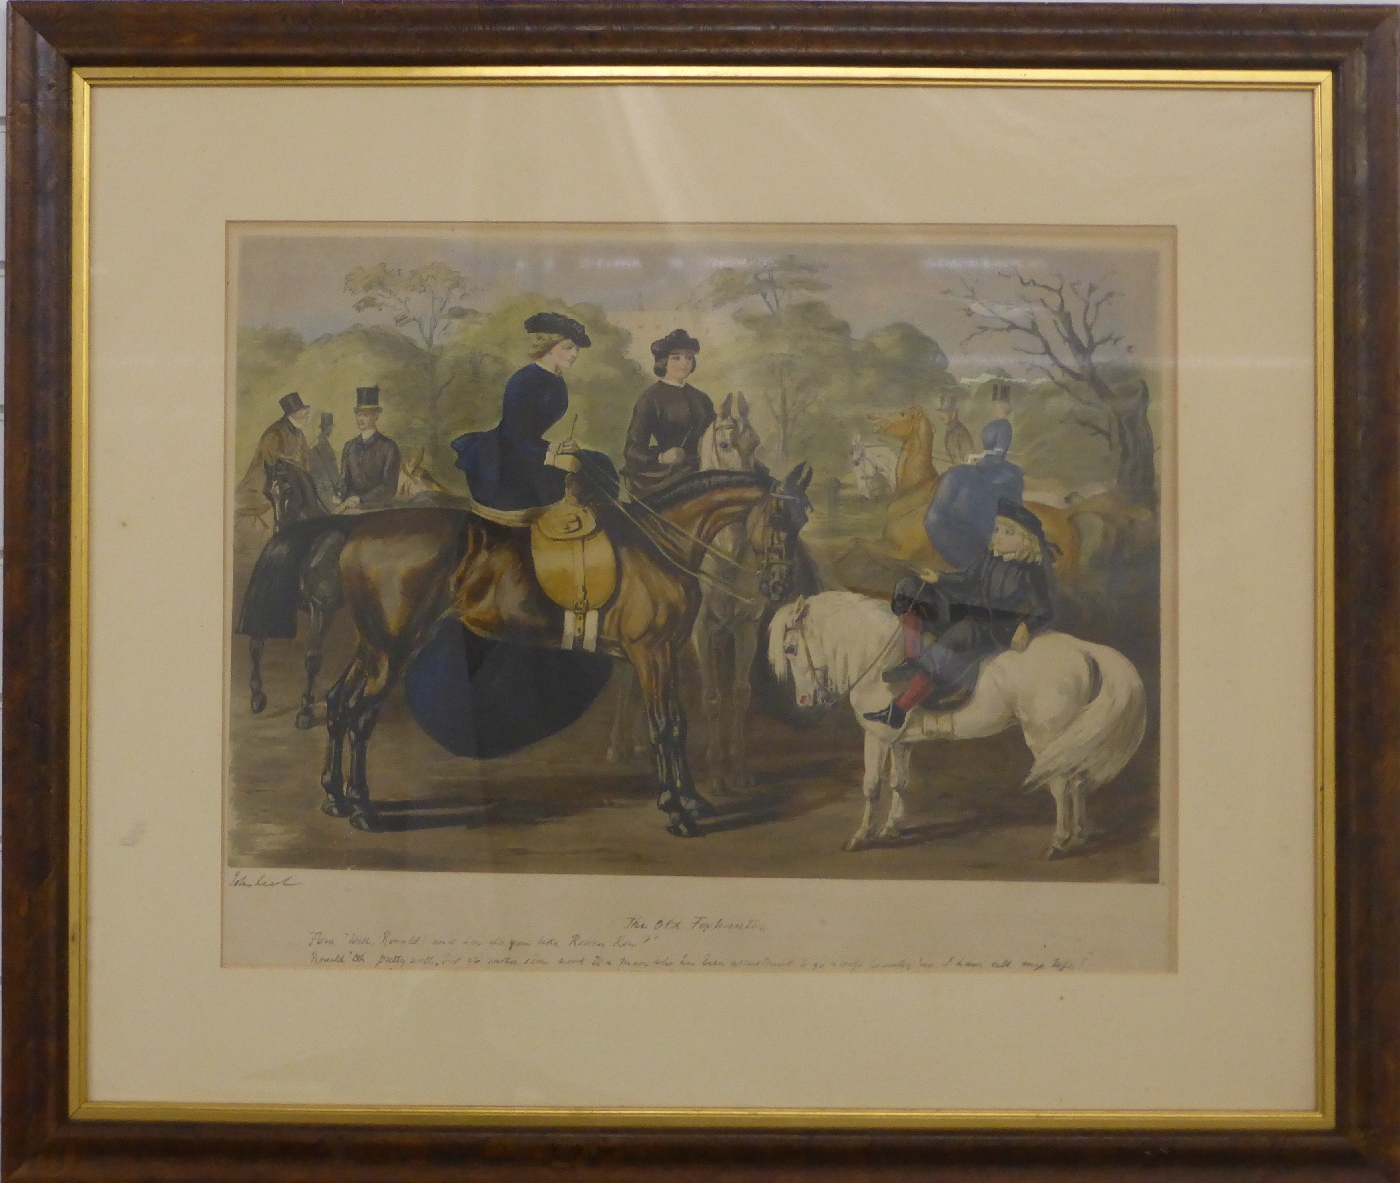 Four 19thC John Leach hunting/horse riding prints, each approximately 47 x 64cm